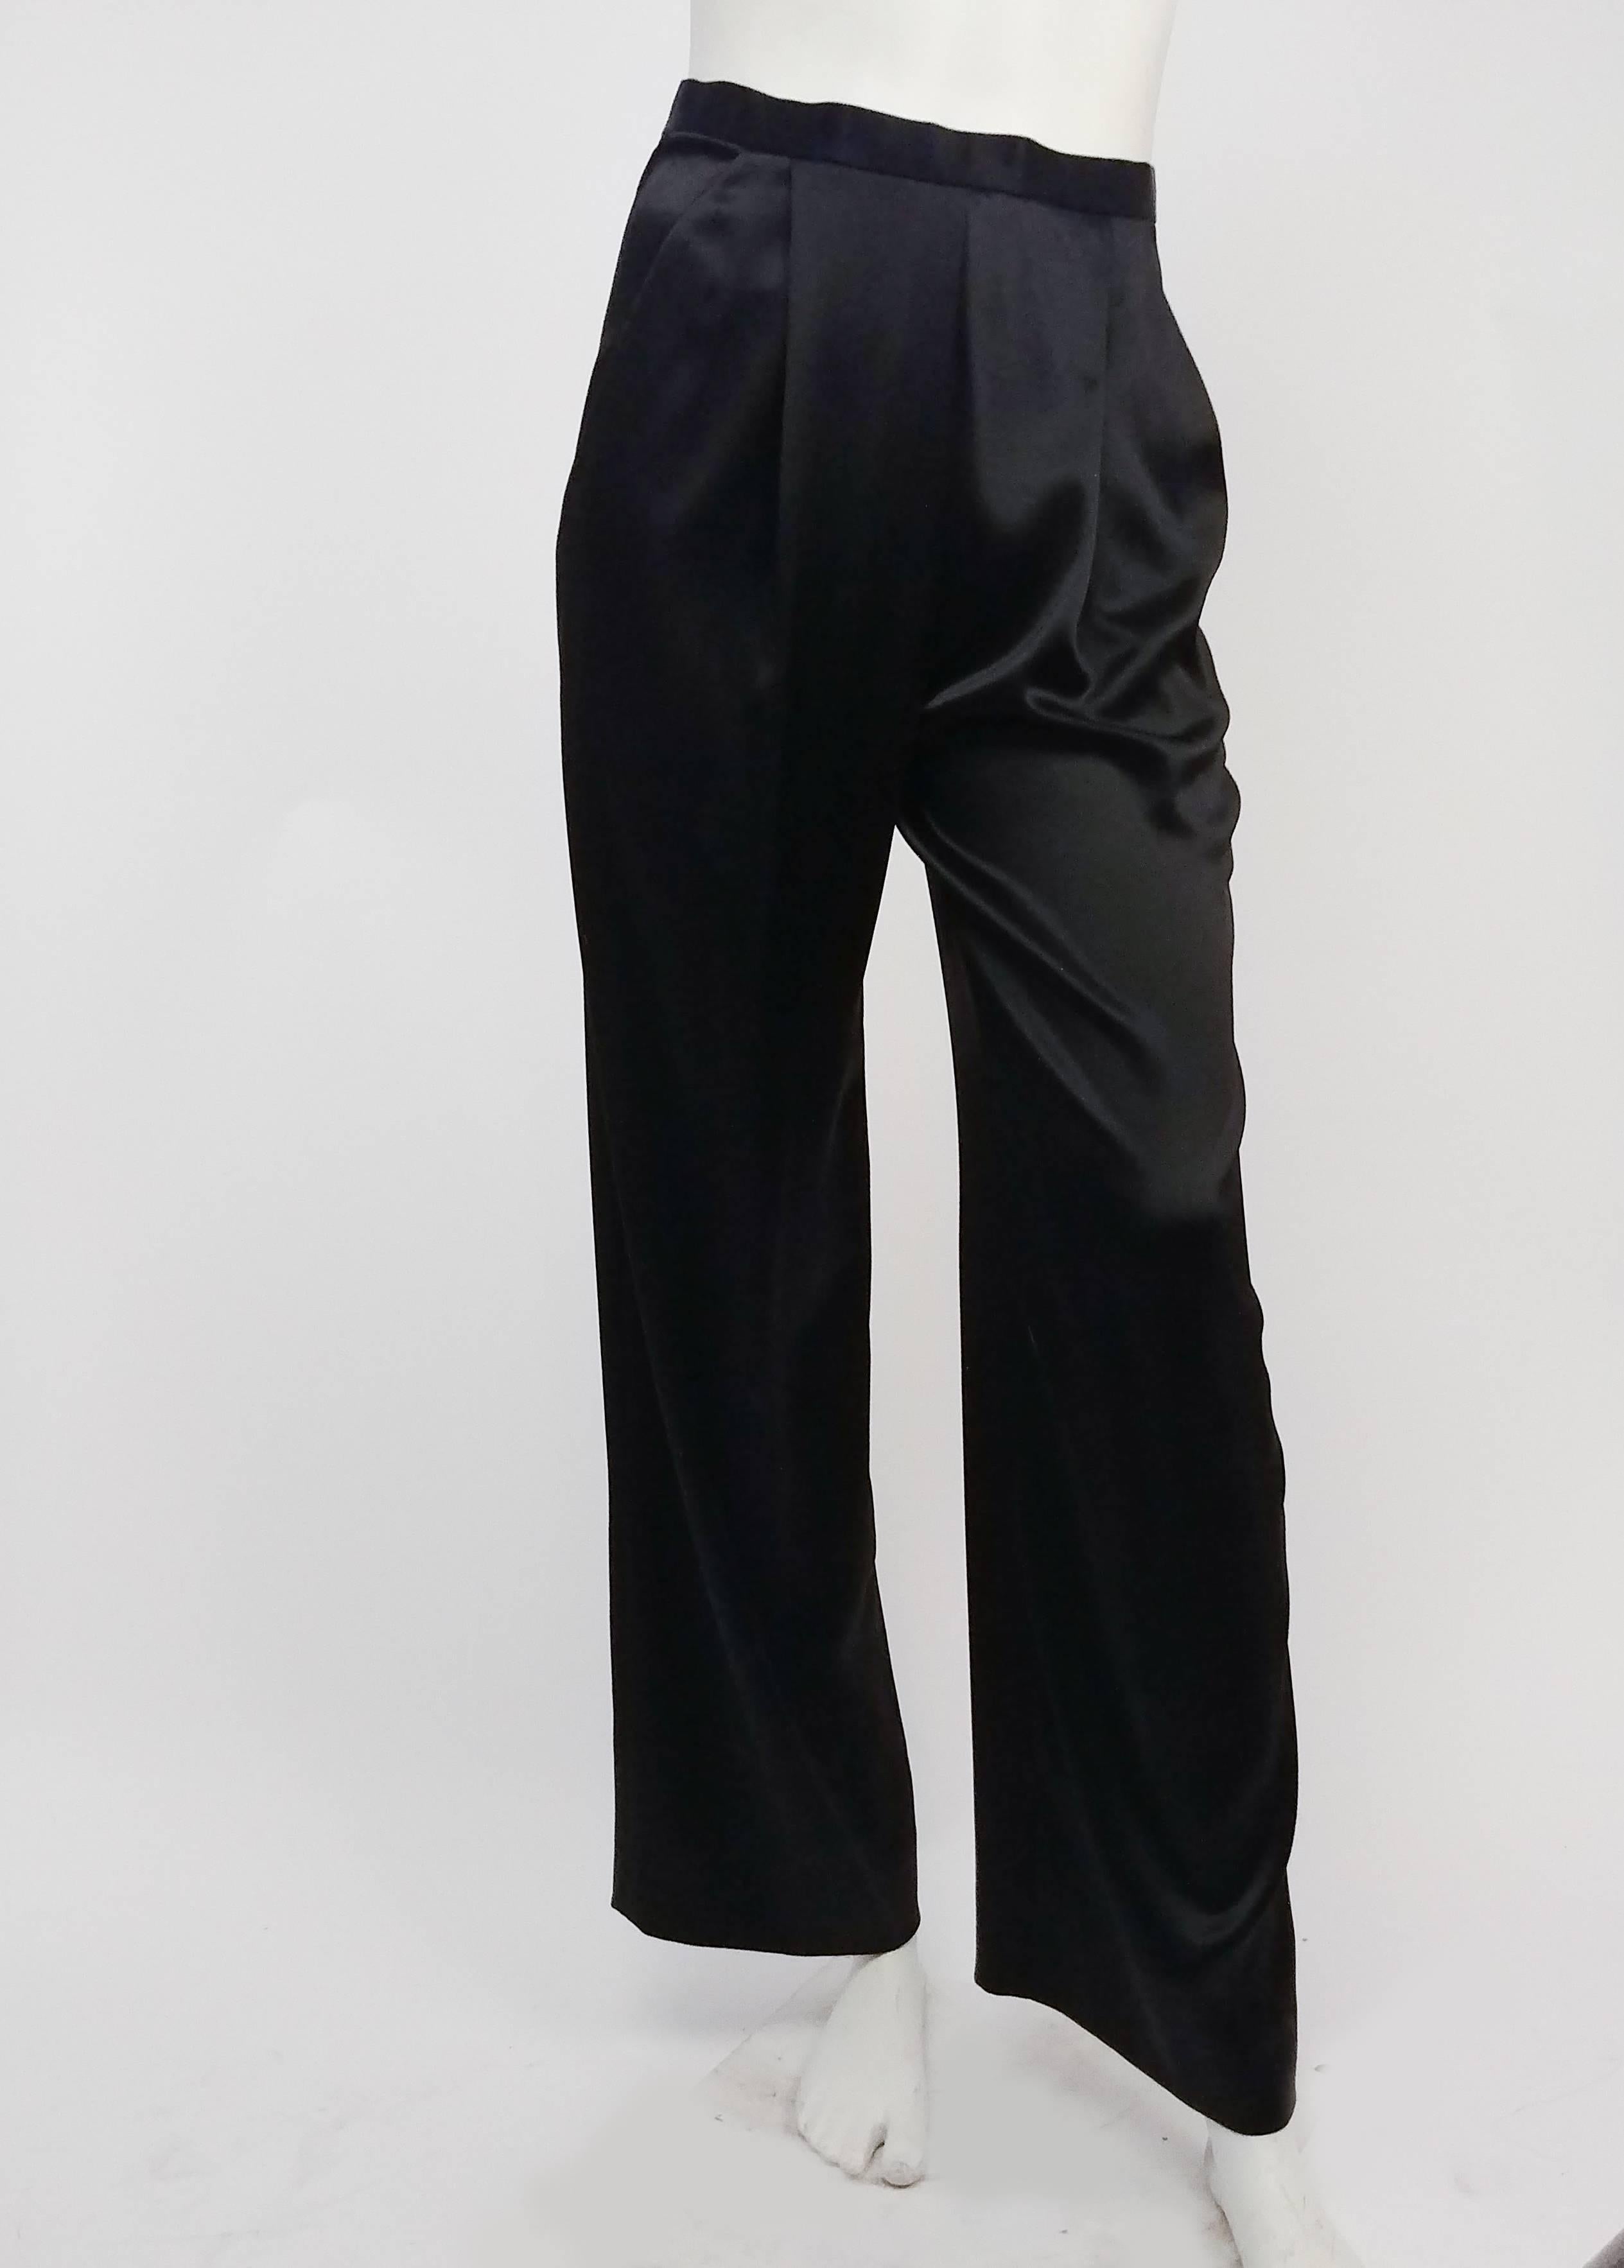 Black 1980s Badgley Mischka Lace Blazer & Satin Trouser Pantsuit For Sale